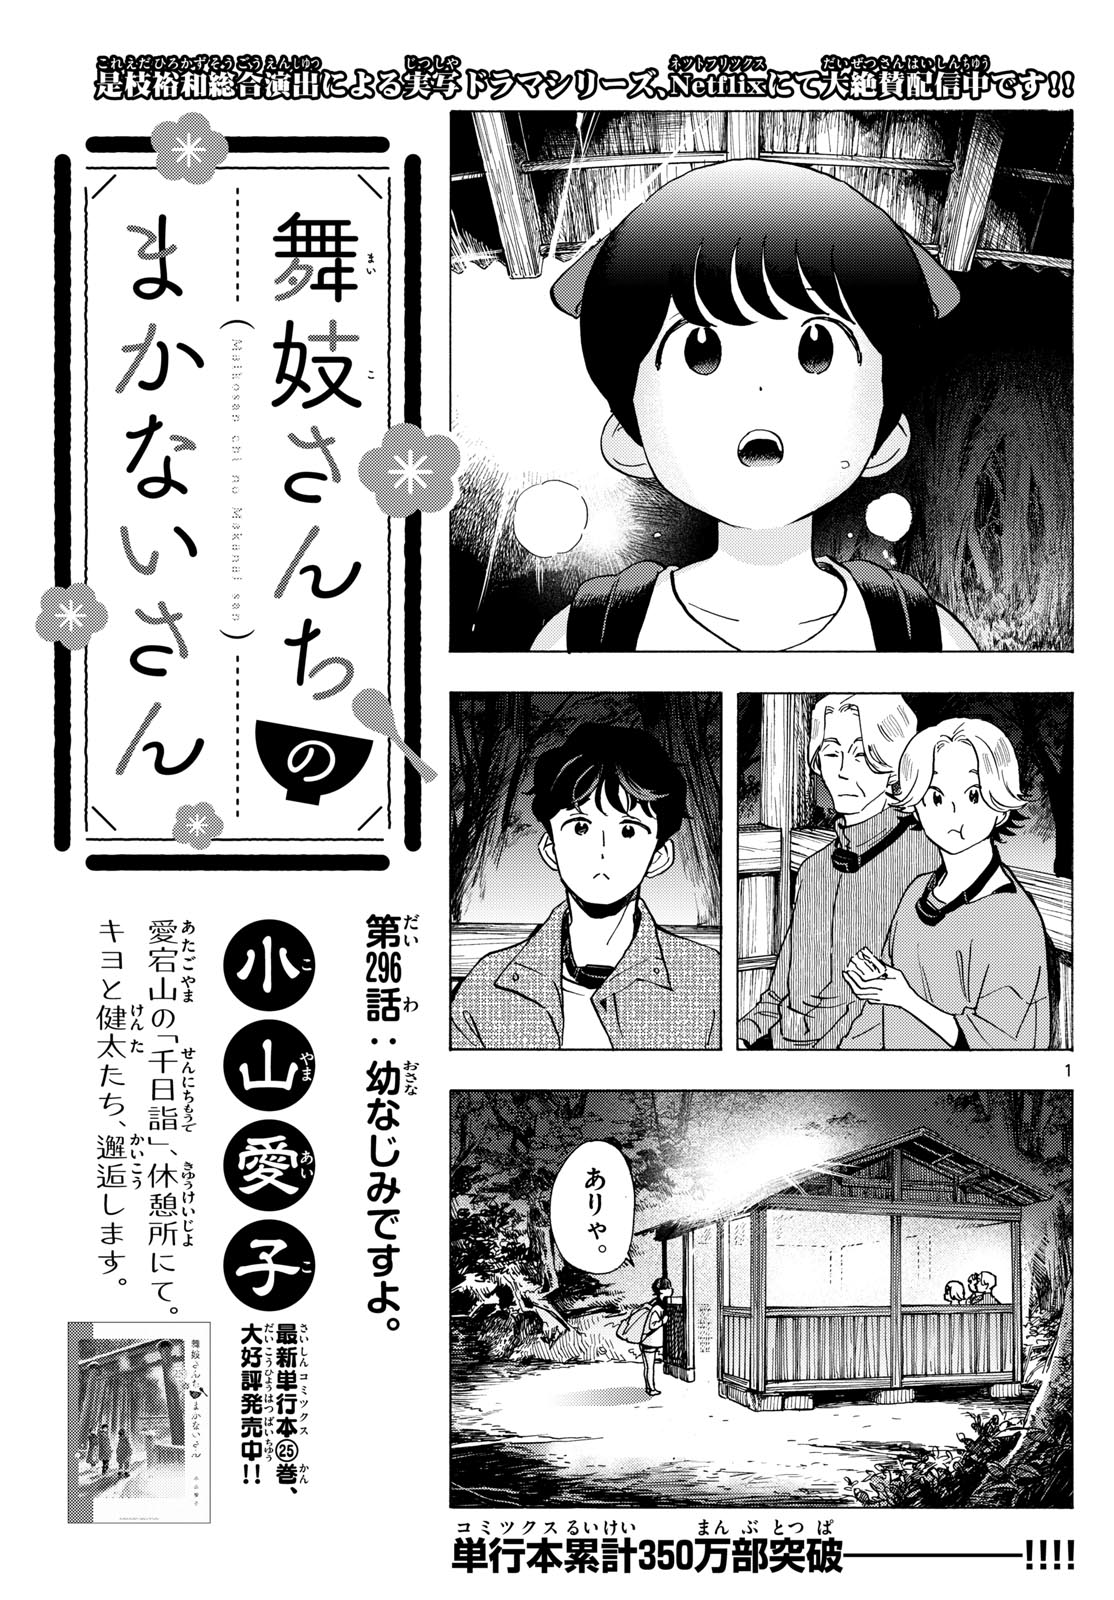 Maiko-san Chi no Makanai-san - Chapter 296 - Page 1